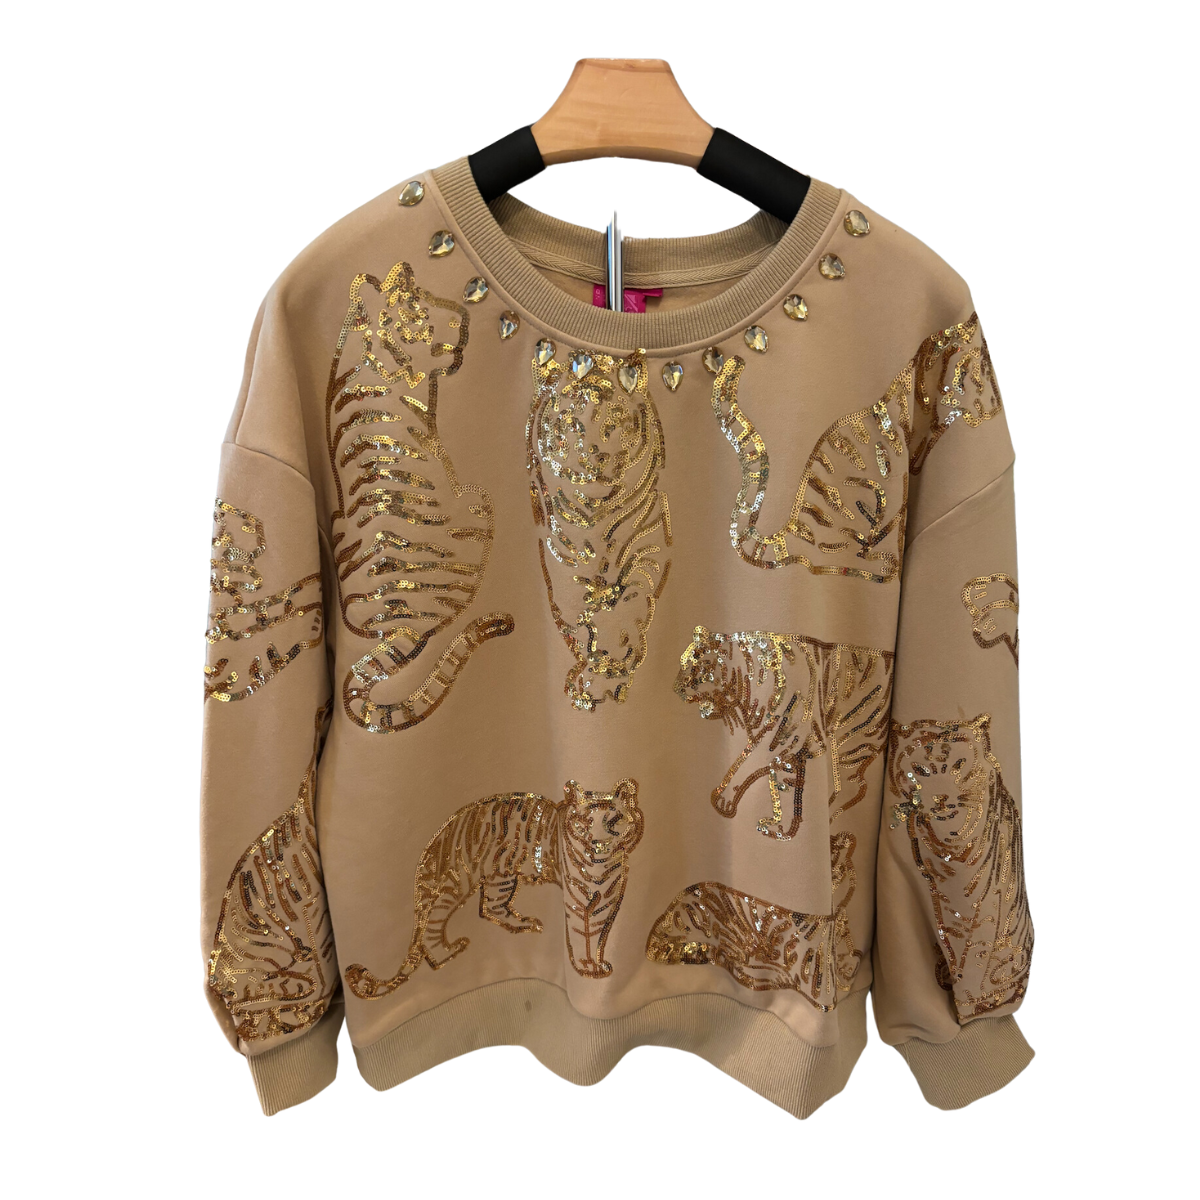 Beige & Gold All Over Tiger Sweatshirt